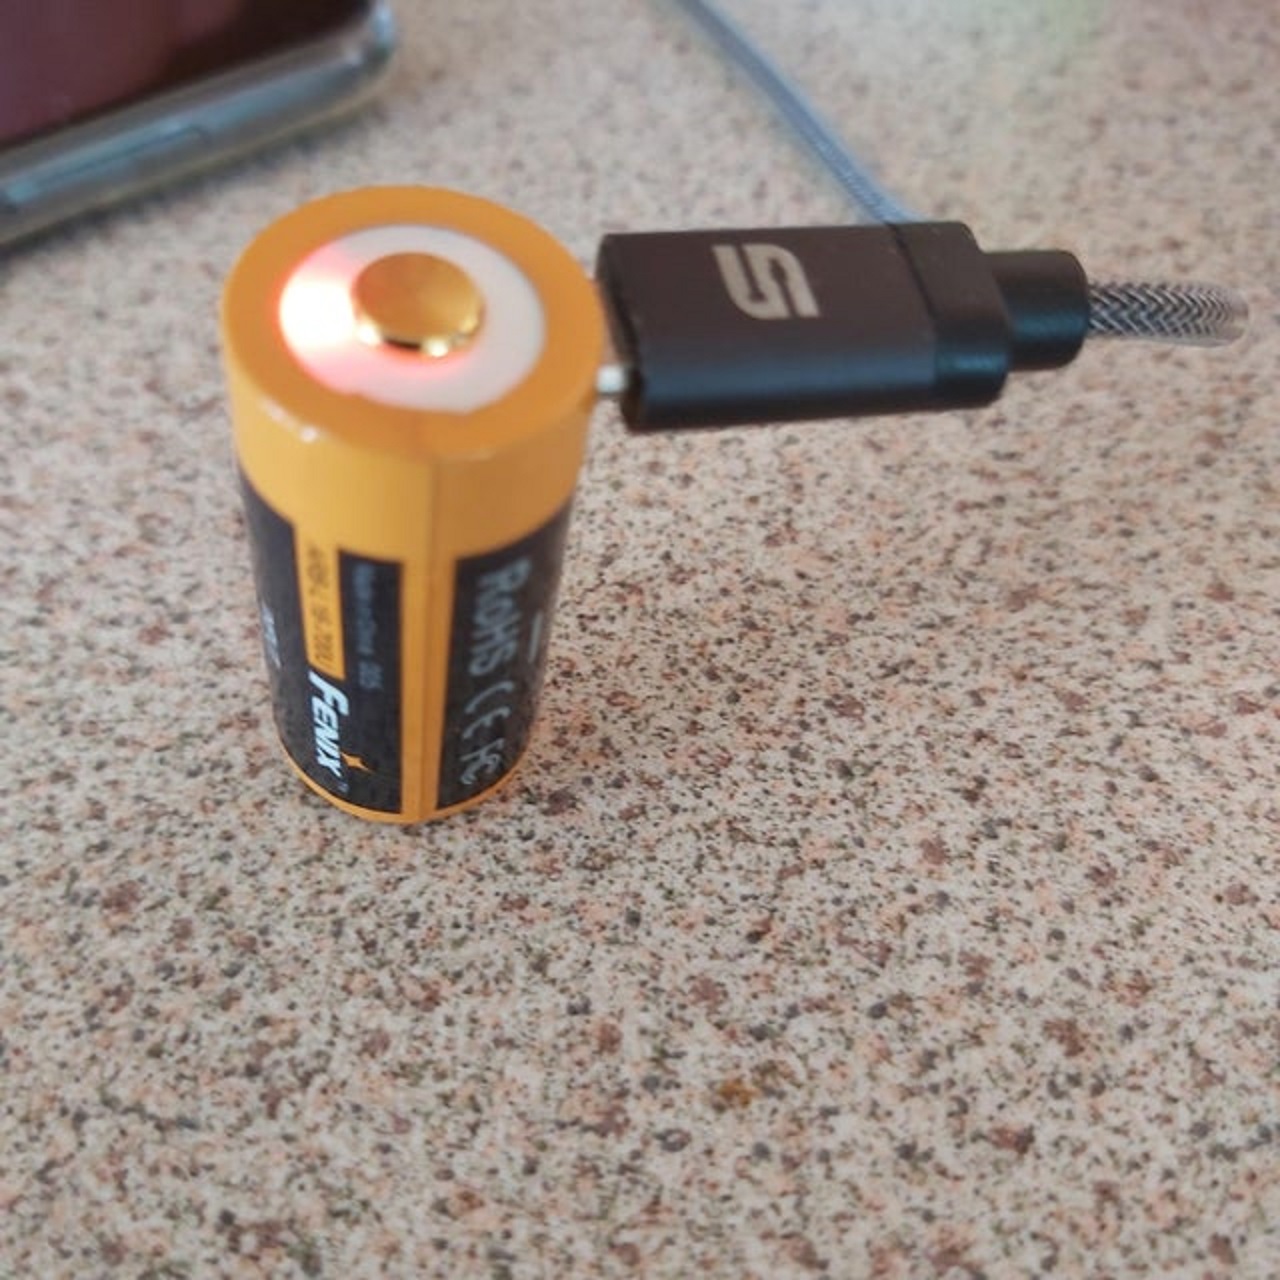 batteria ricaricabile tramite USB